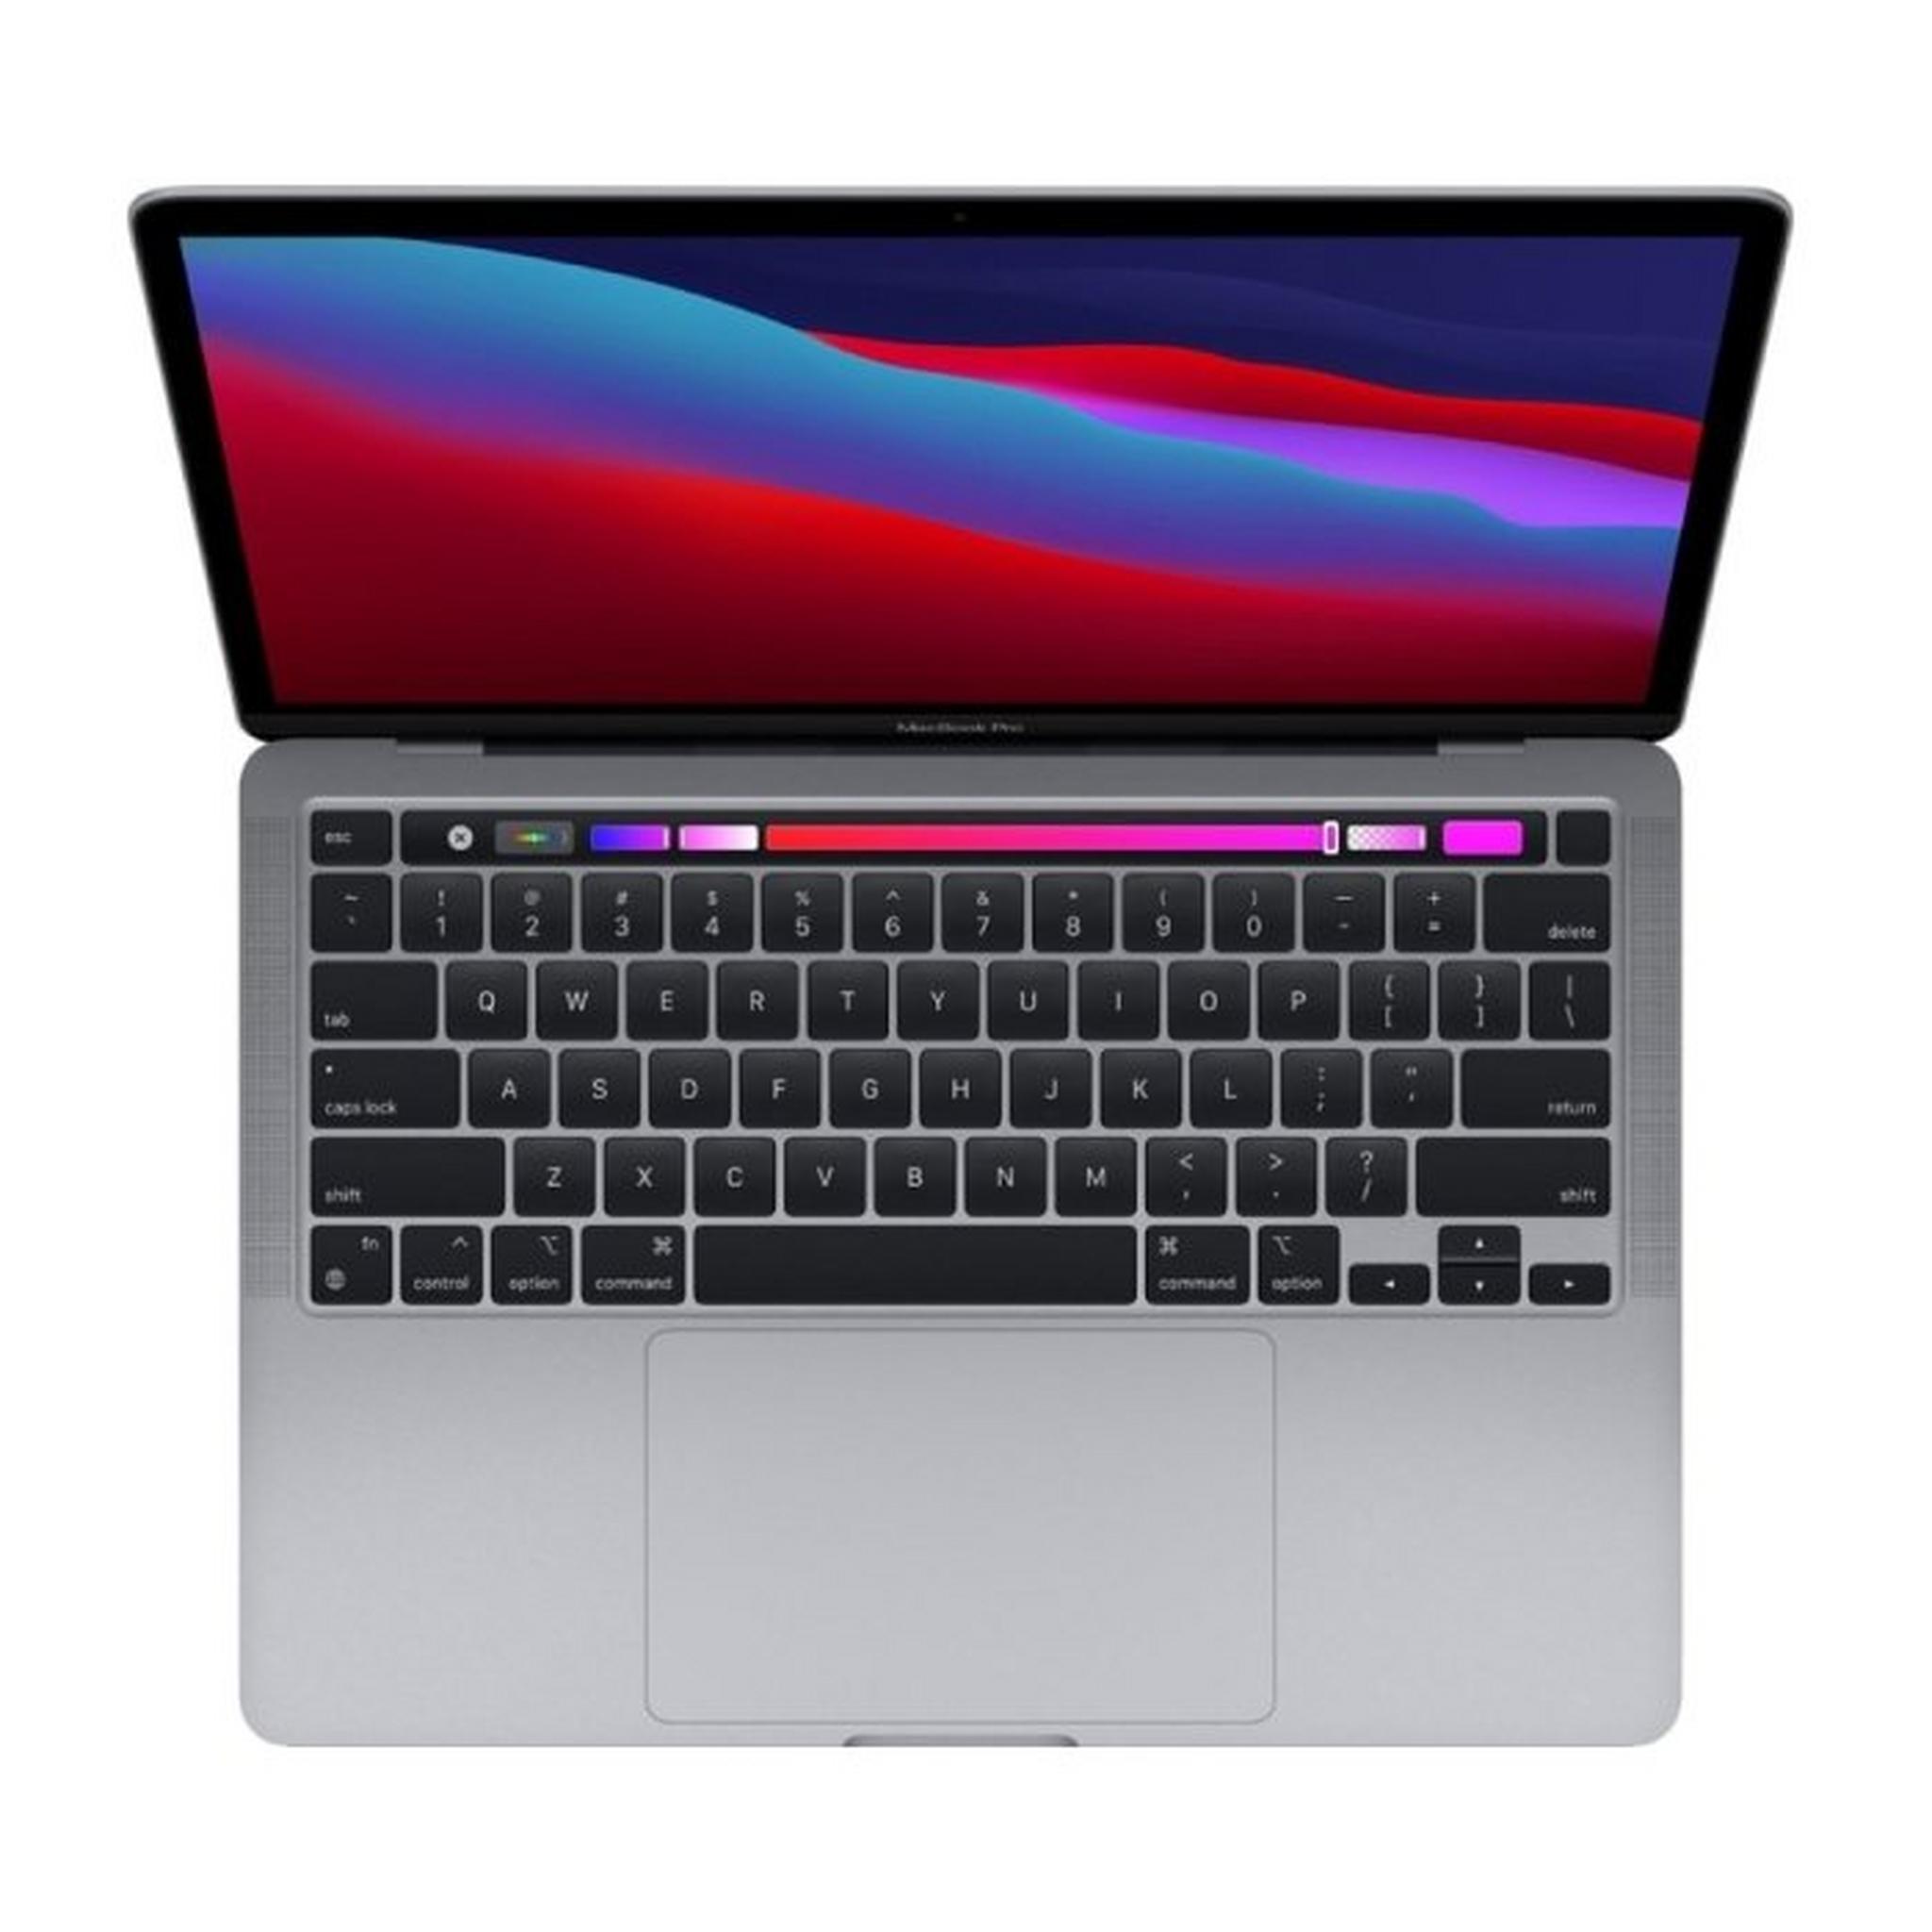 Apple Macbook Pro M1 8GB RAM 256GB SSD 13.3" Laptop - Space Grey